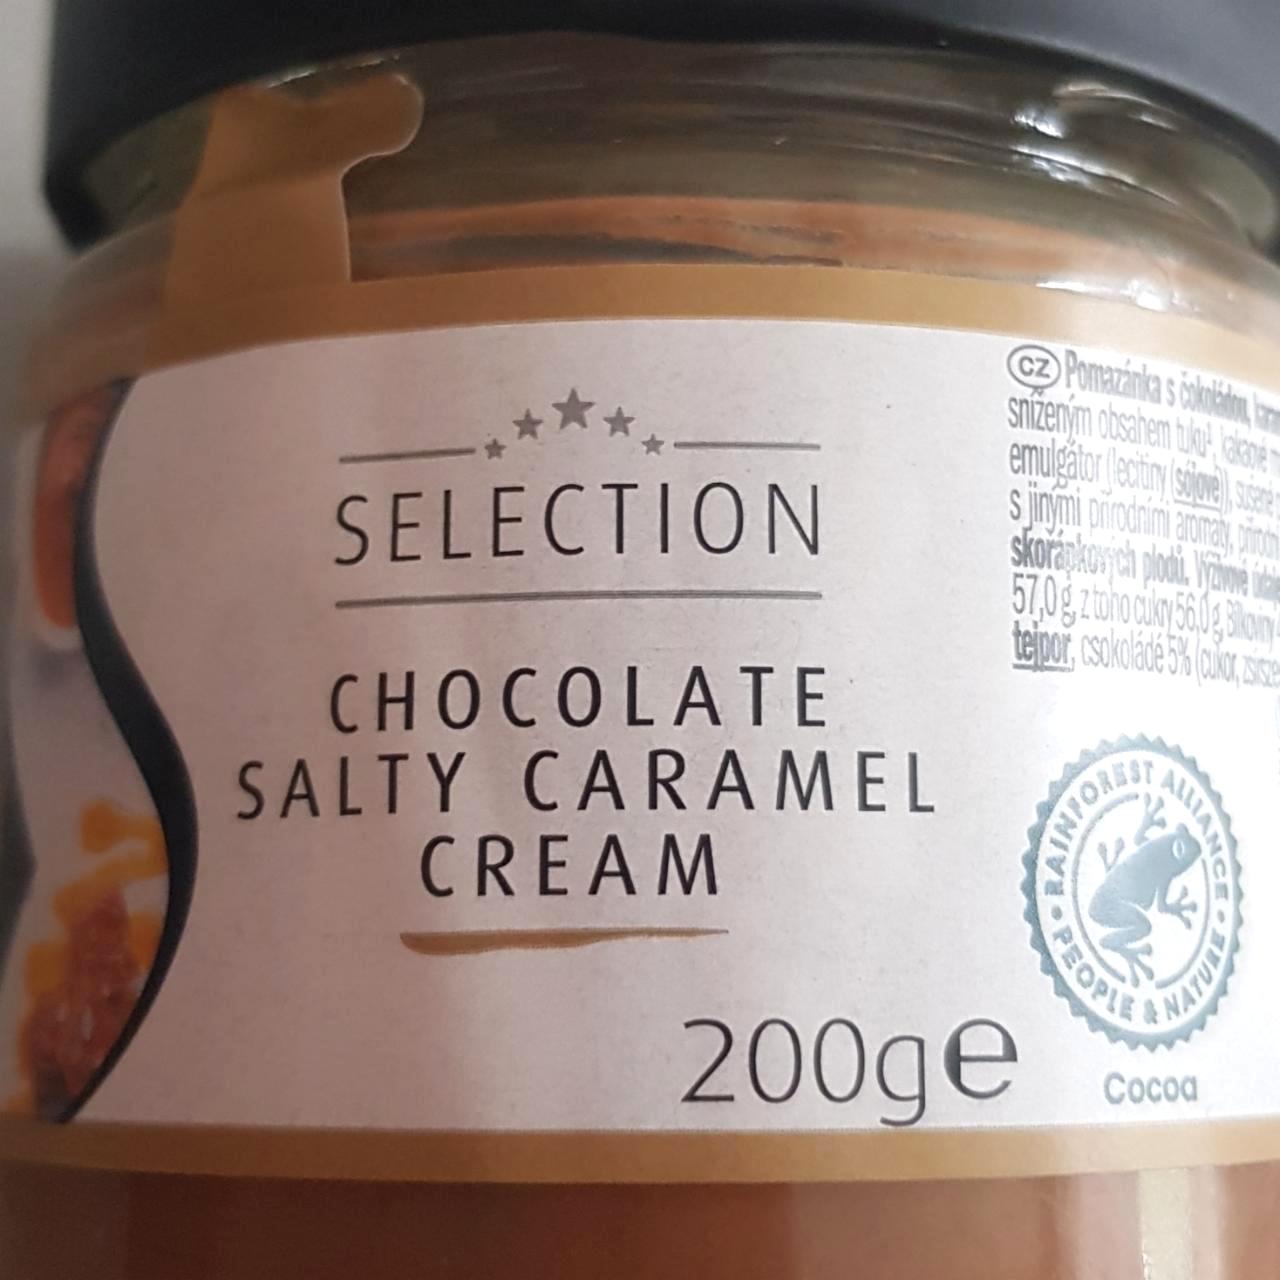 Képek - Chocolate salty caramel cream Selection